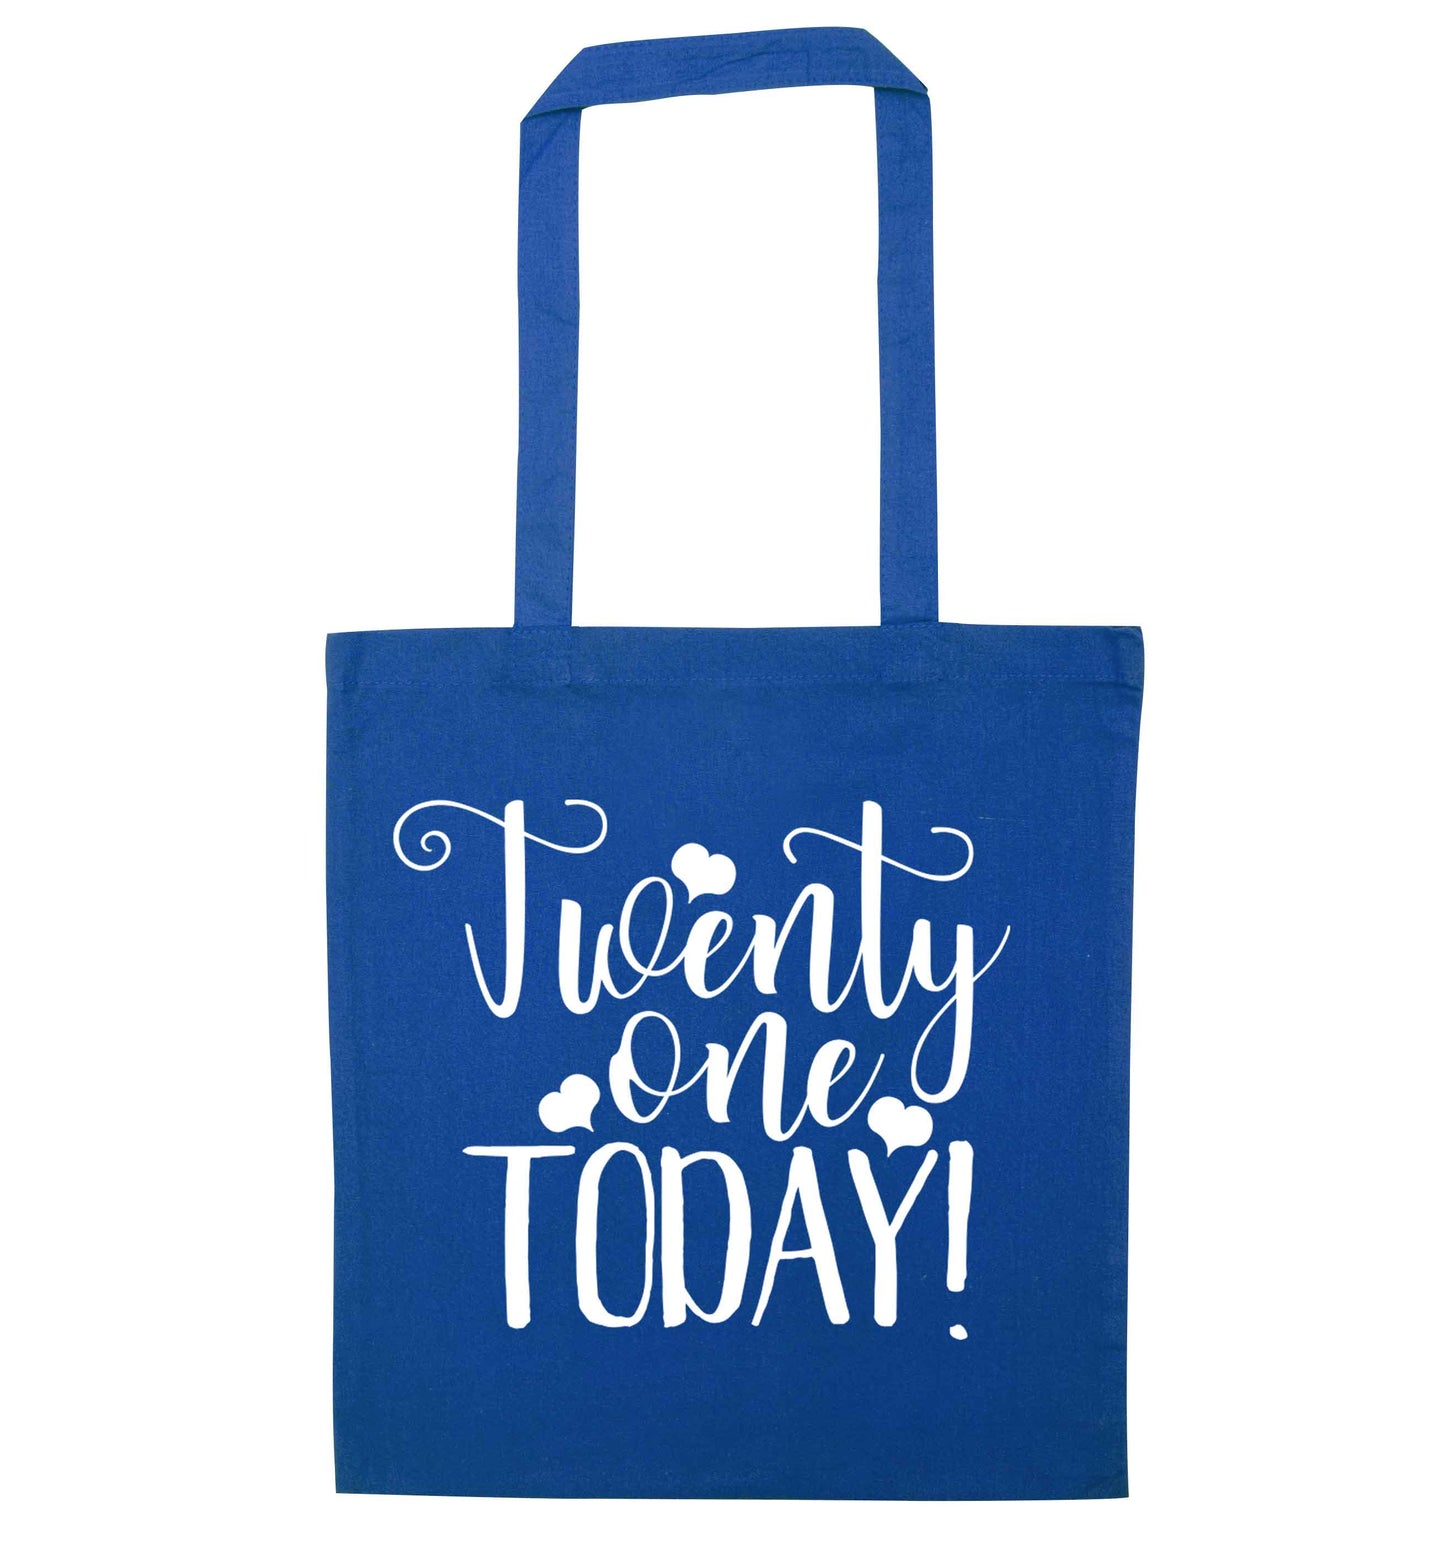 Twenty one today!blue tote bag